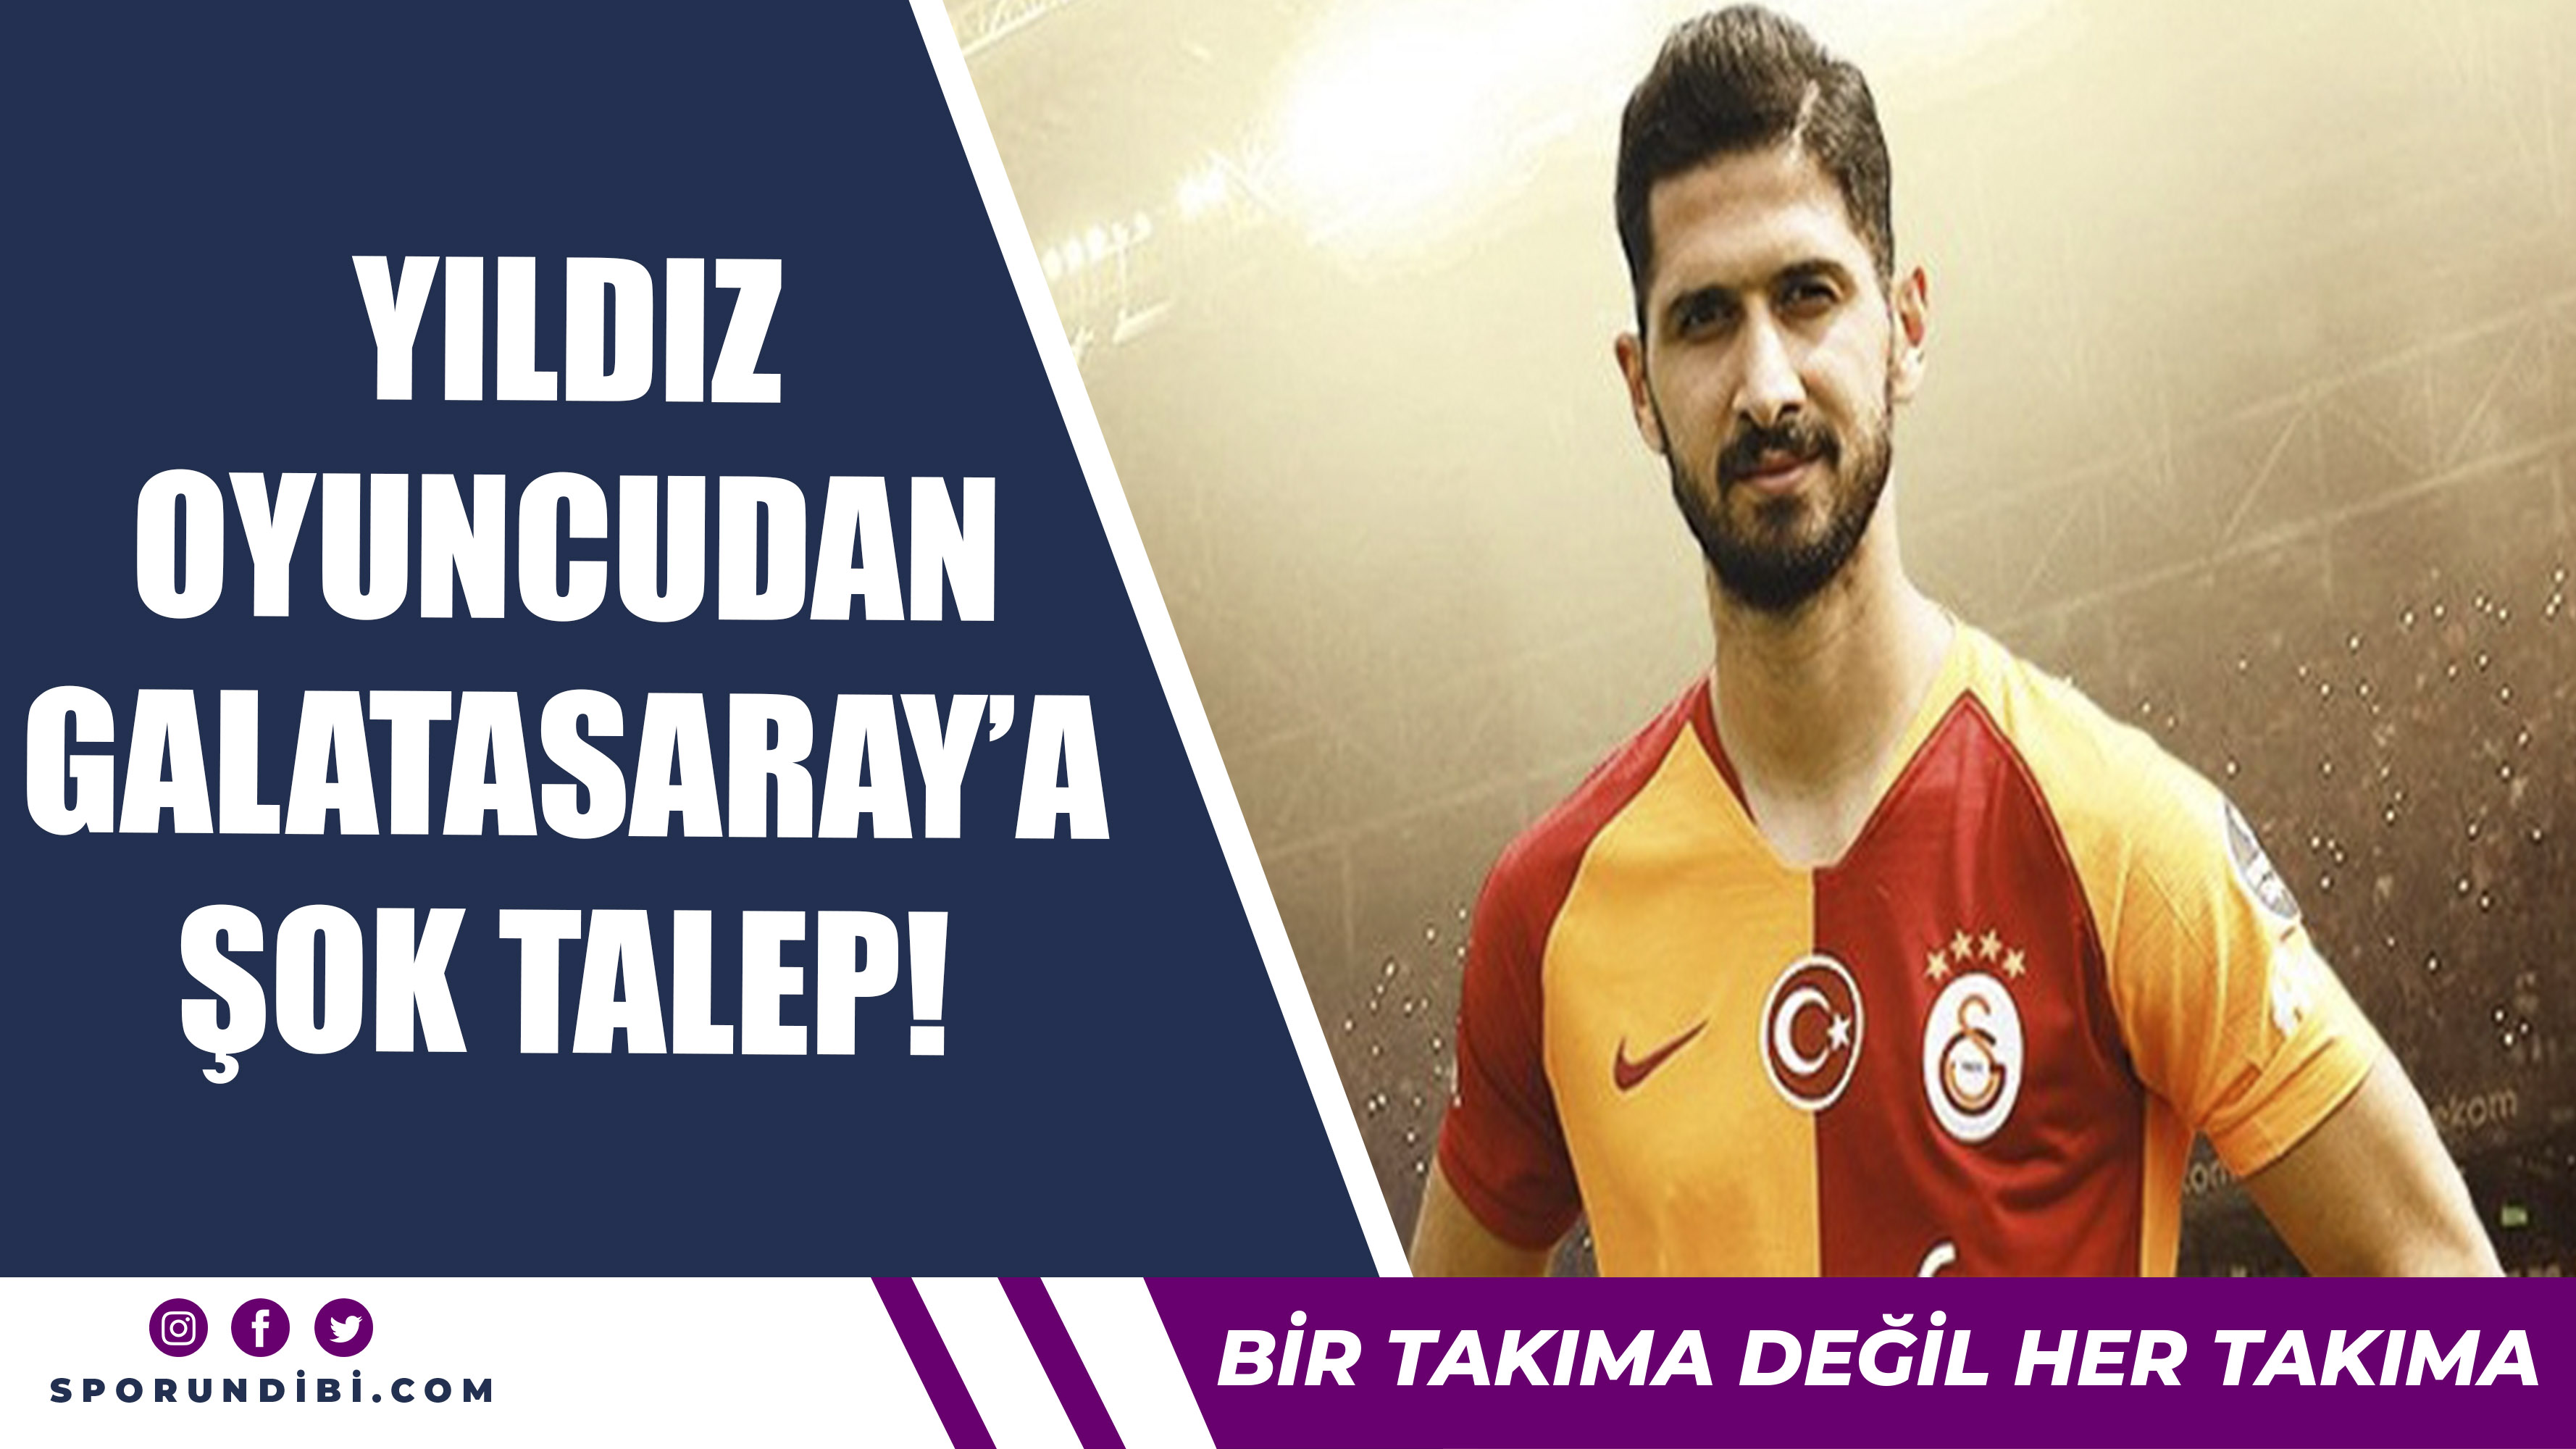 Yıldız Oyuncudan Galatasaray'a Şok Talep!